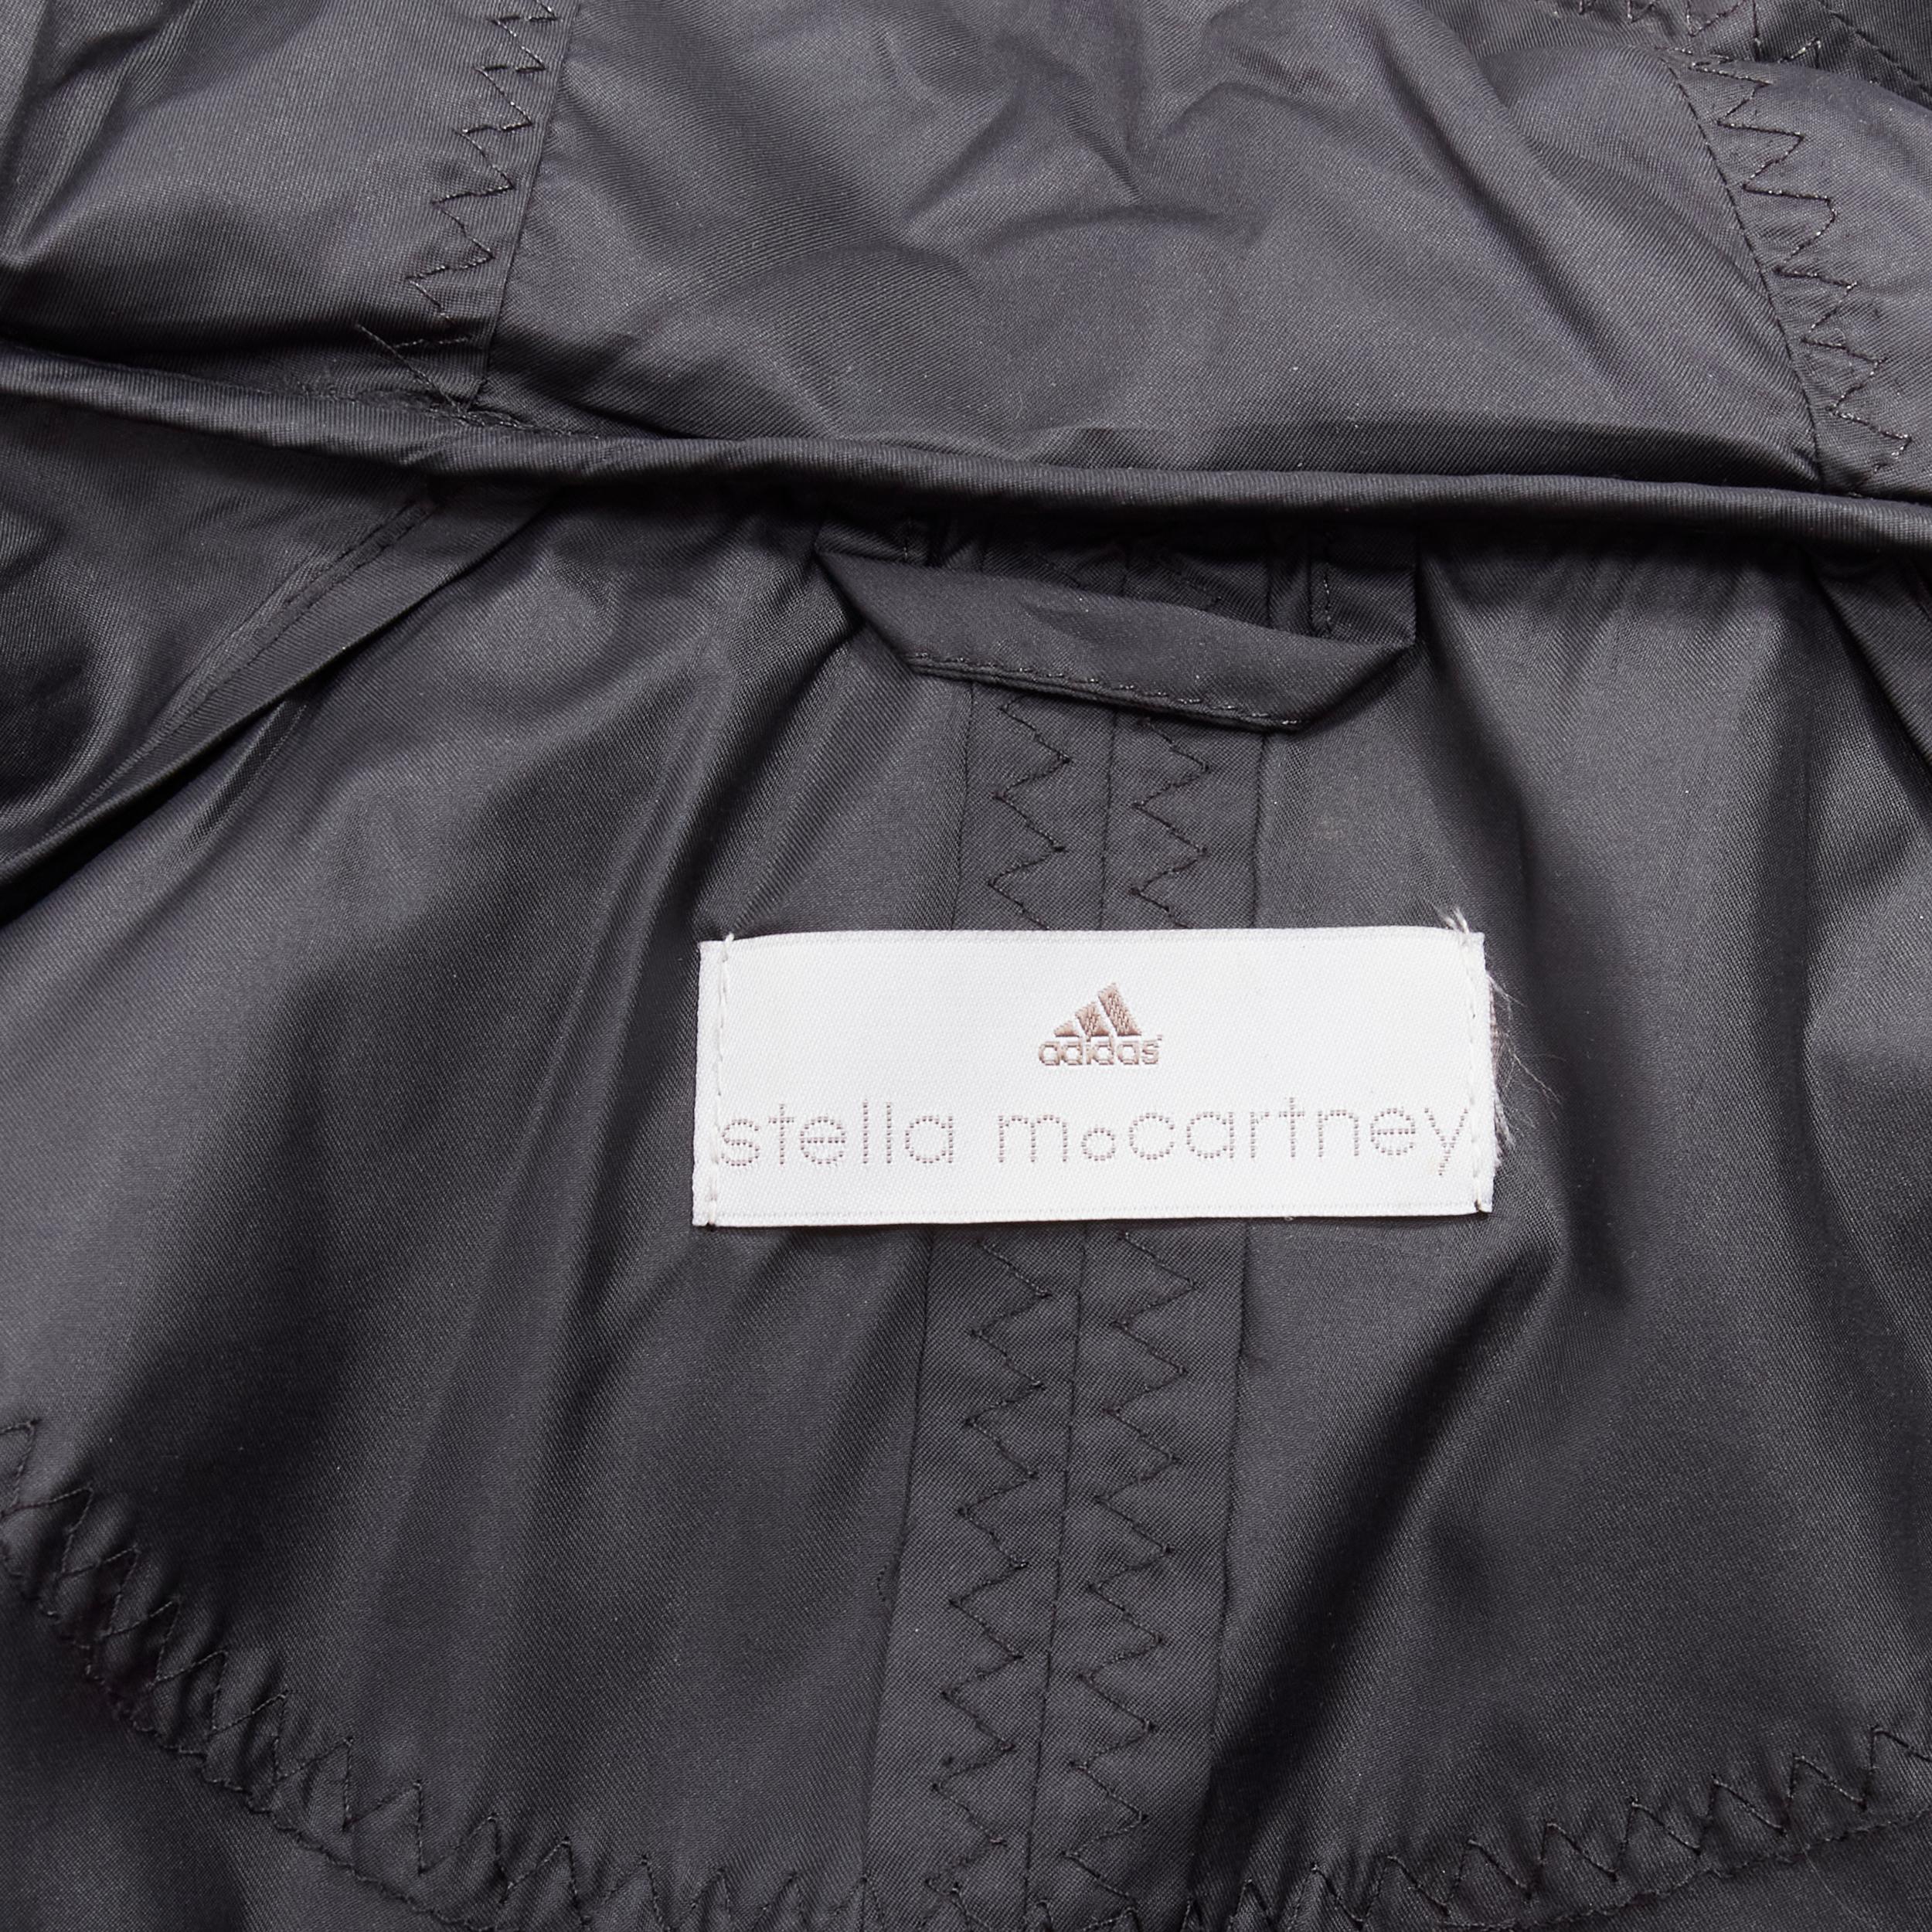 STELLA MCCARTNEY ADIDAS pleated ruffle light nylon windbreaker anorak jacket S 6